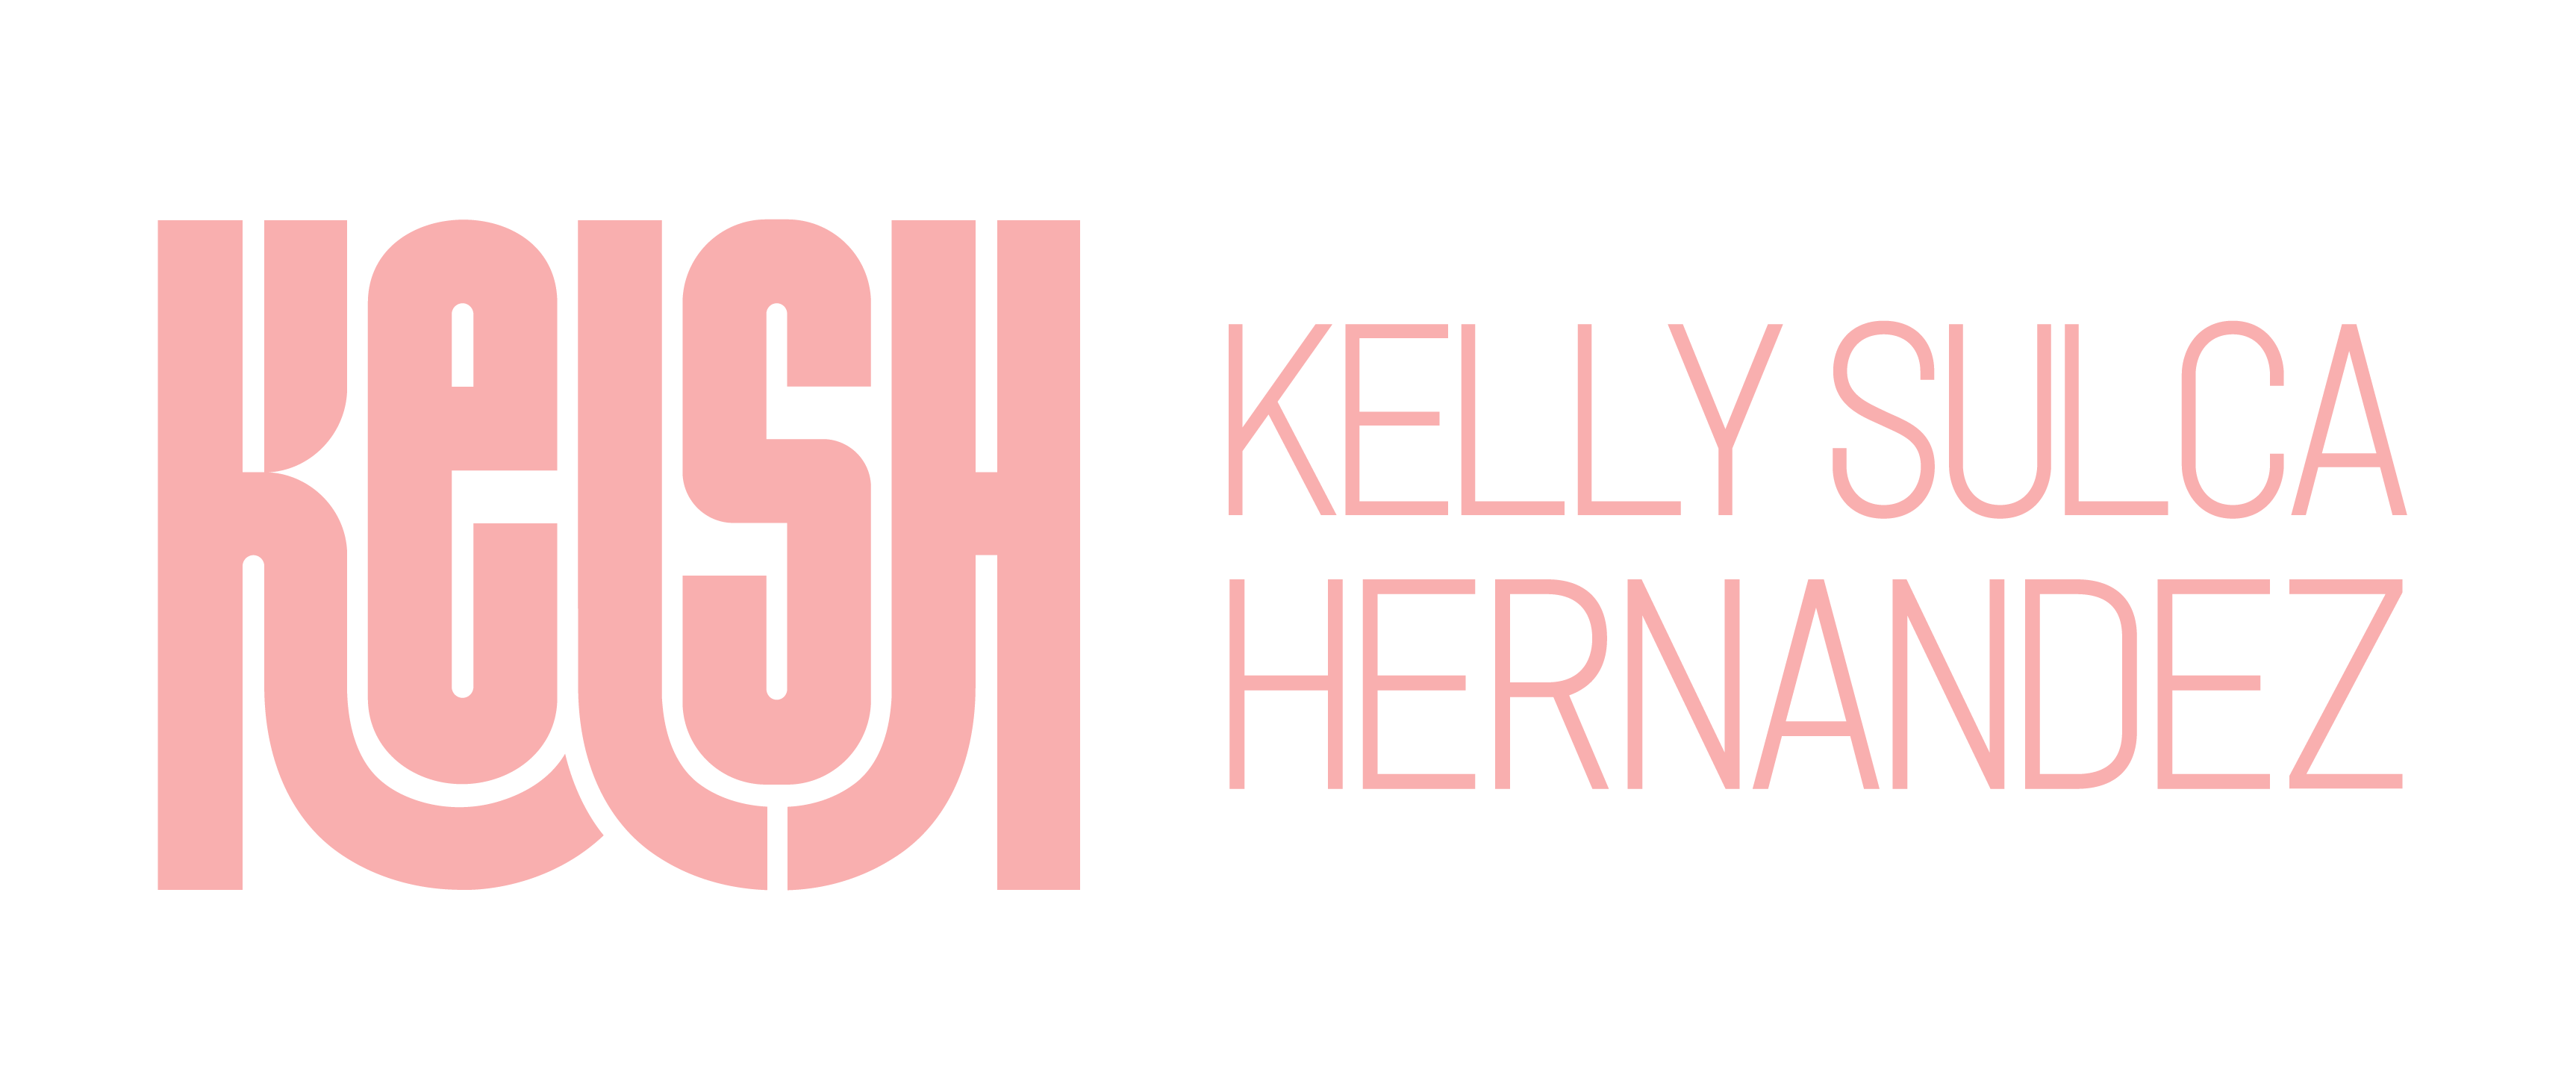 Kelly Sulca Hernandez